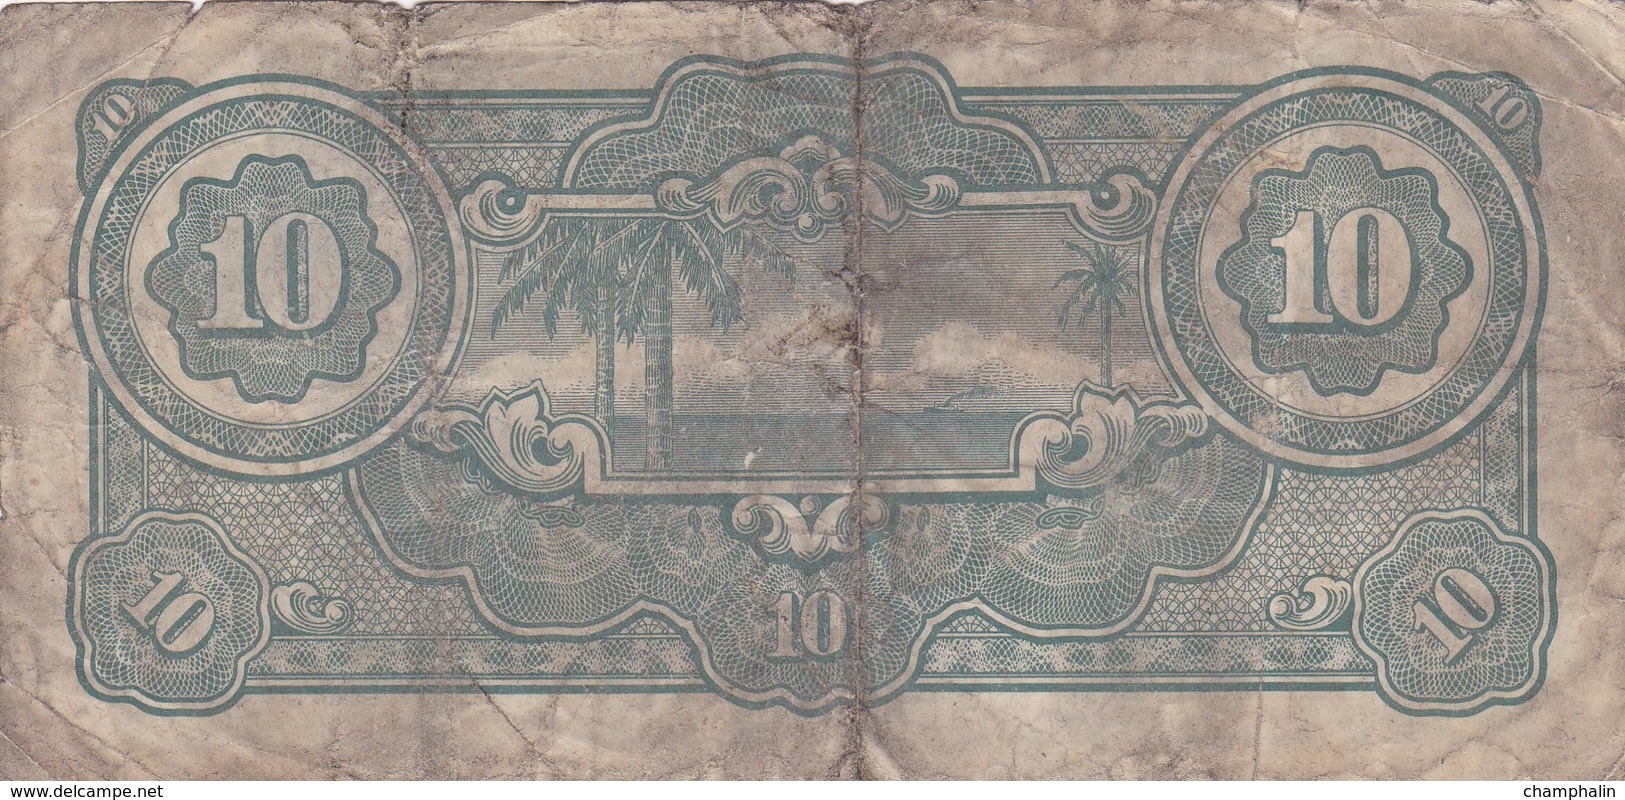 Malaisie - Billet De 10 Dollars - Occupation Japonaise WWII - Malesia